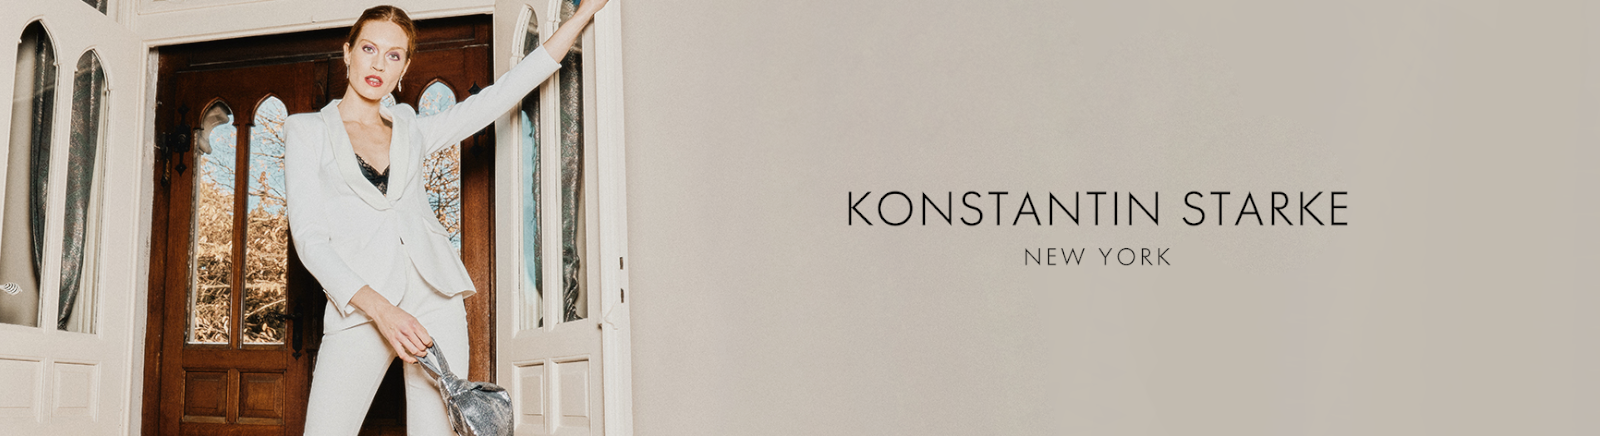 Juppen: Konstantin Starke Stiefeletten für Damen online shoppen